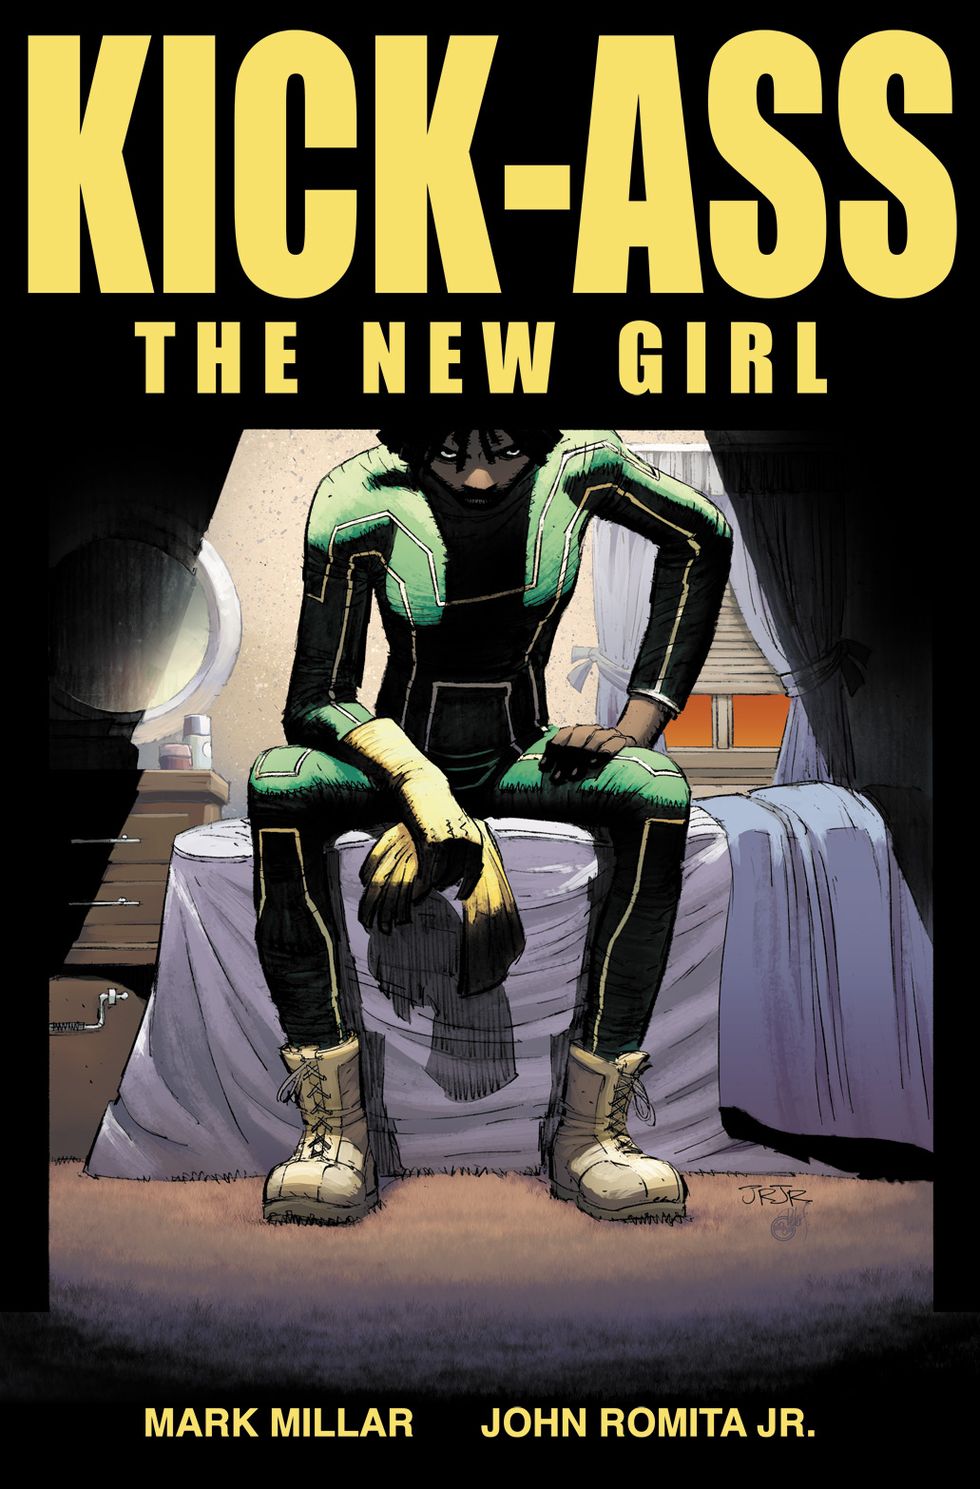 Kick-Ass: The New Girl